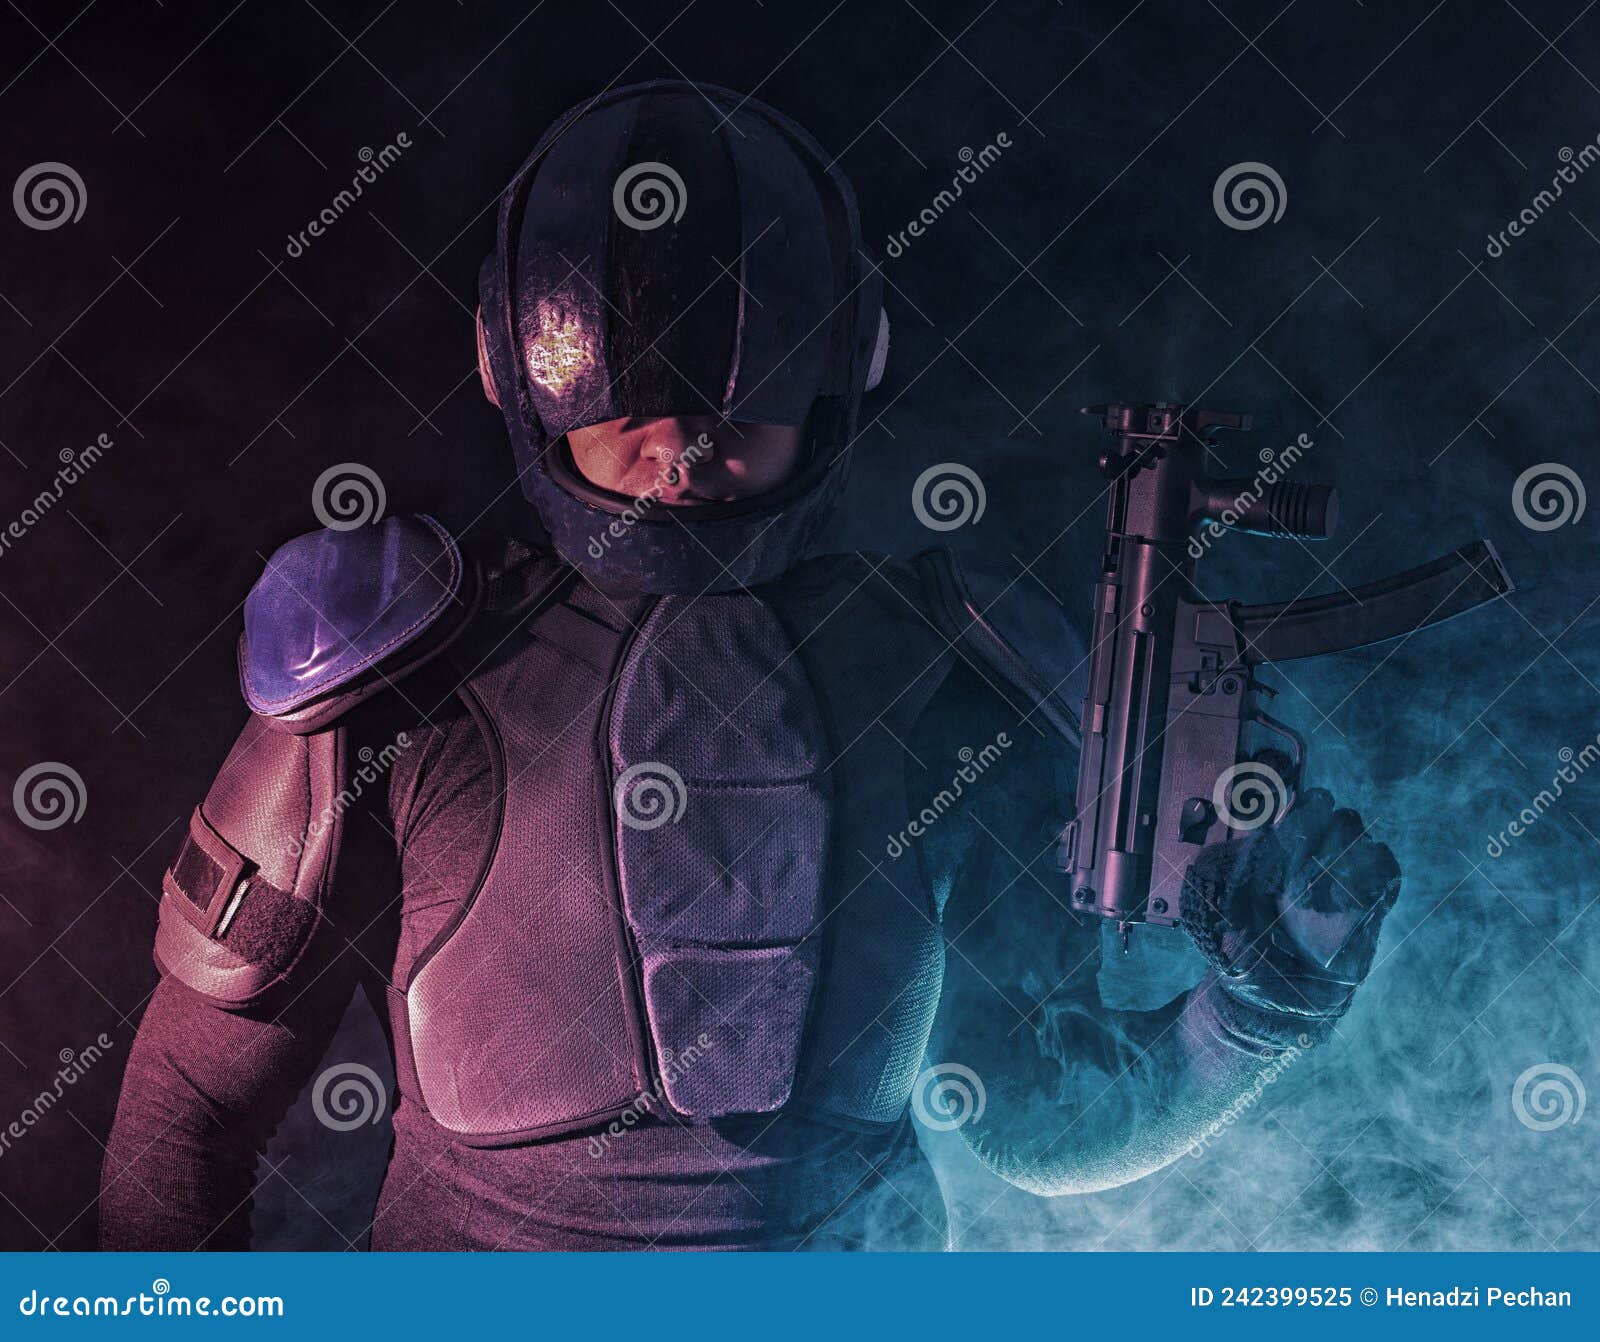 cyberpunk concept, future world. police officer cop in dark, halfman bionic cyborg or reloads gun, twitches cocking lever, stands